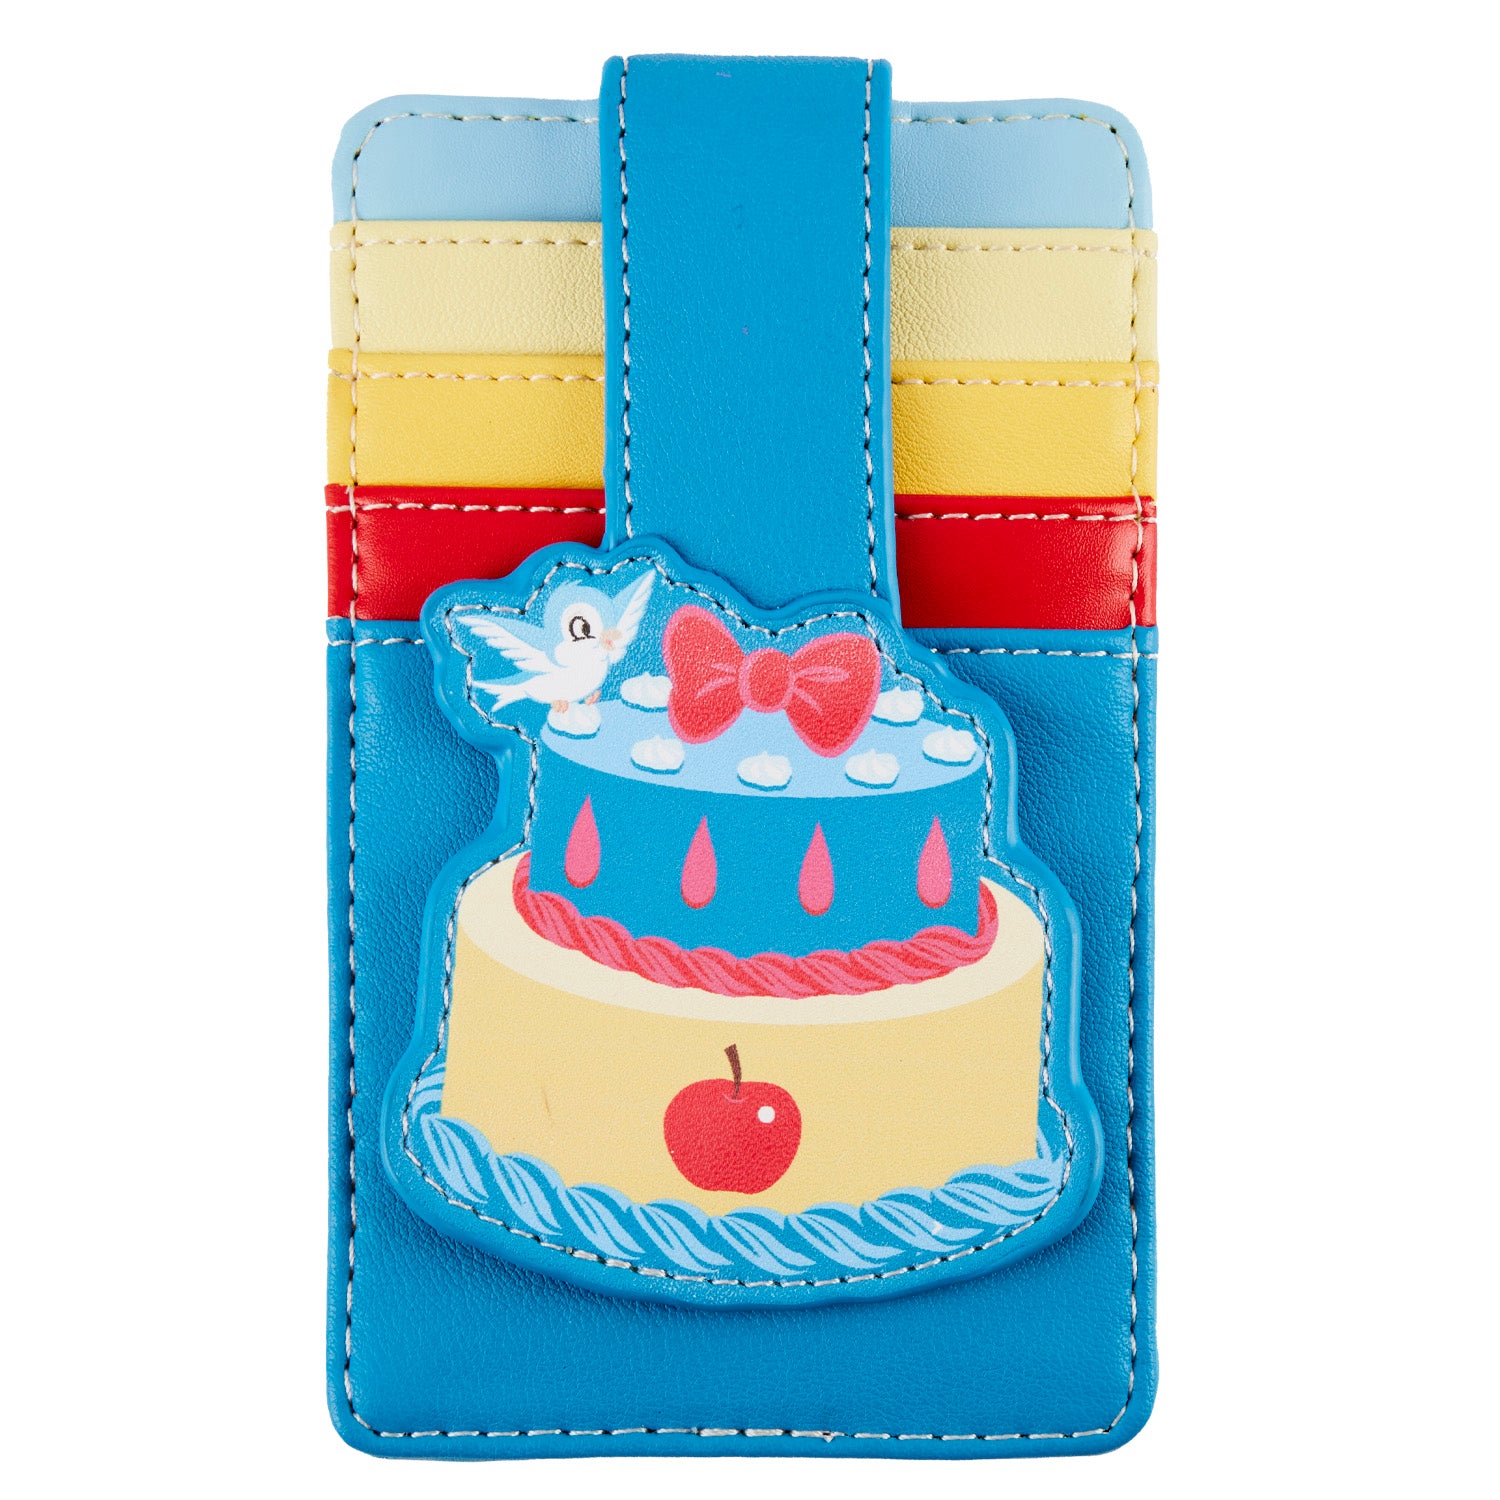 LF Snow White Cake Cardholder